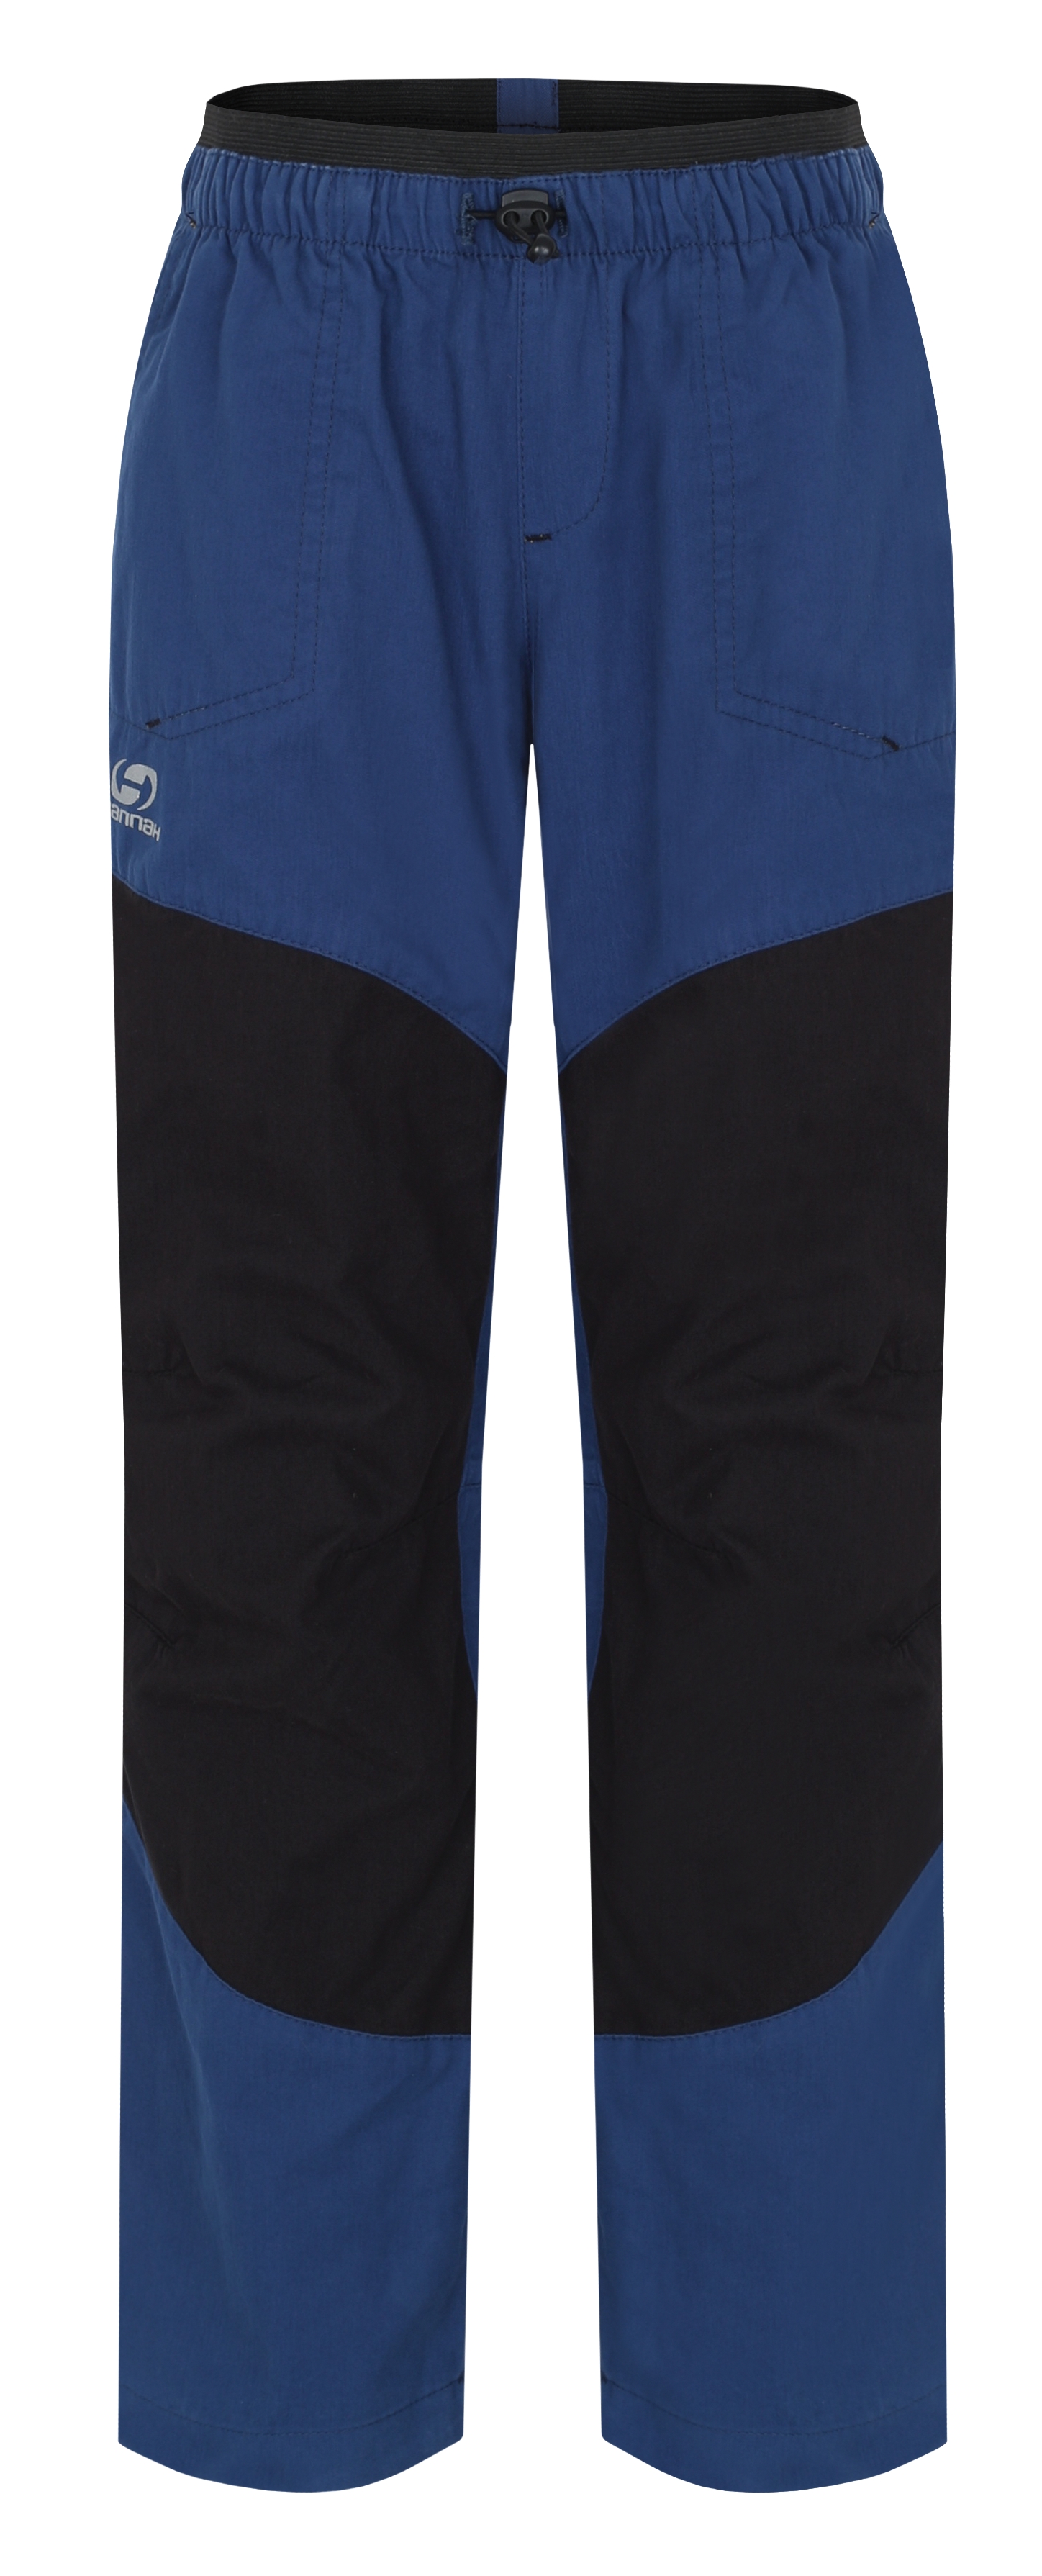 Hannah GUINES JR ensign blue/anthracite Velikost: 116 dětské kalhoty